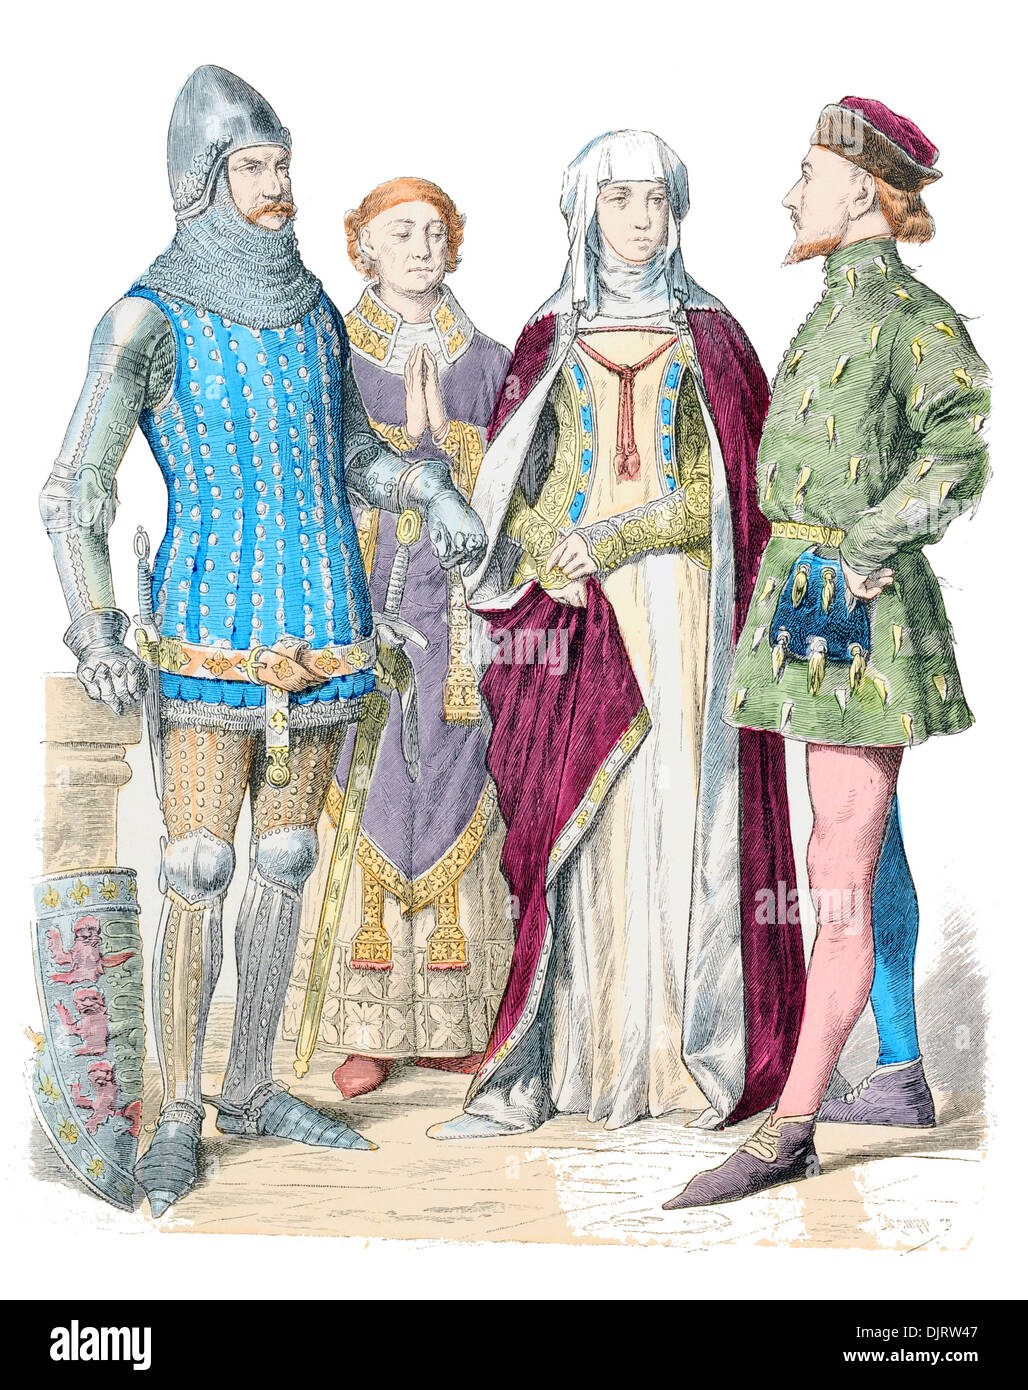 14th Century XIV 1300s English costume Stock Photo - Alamy